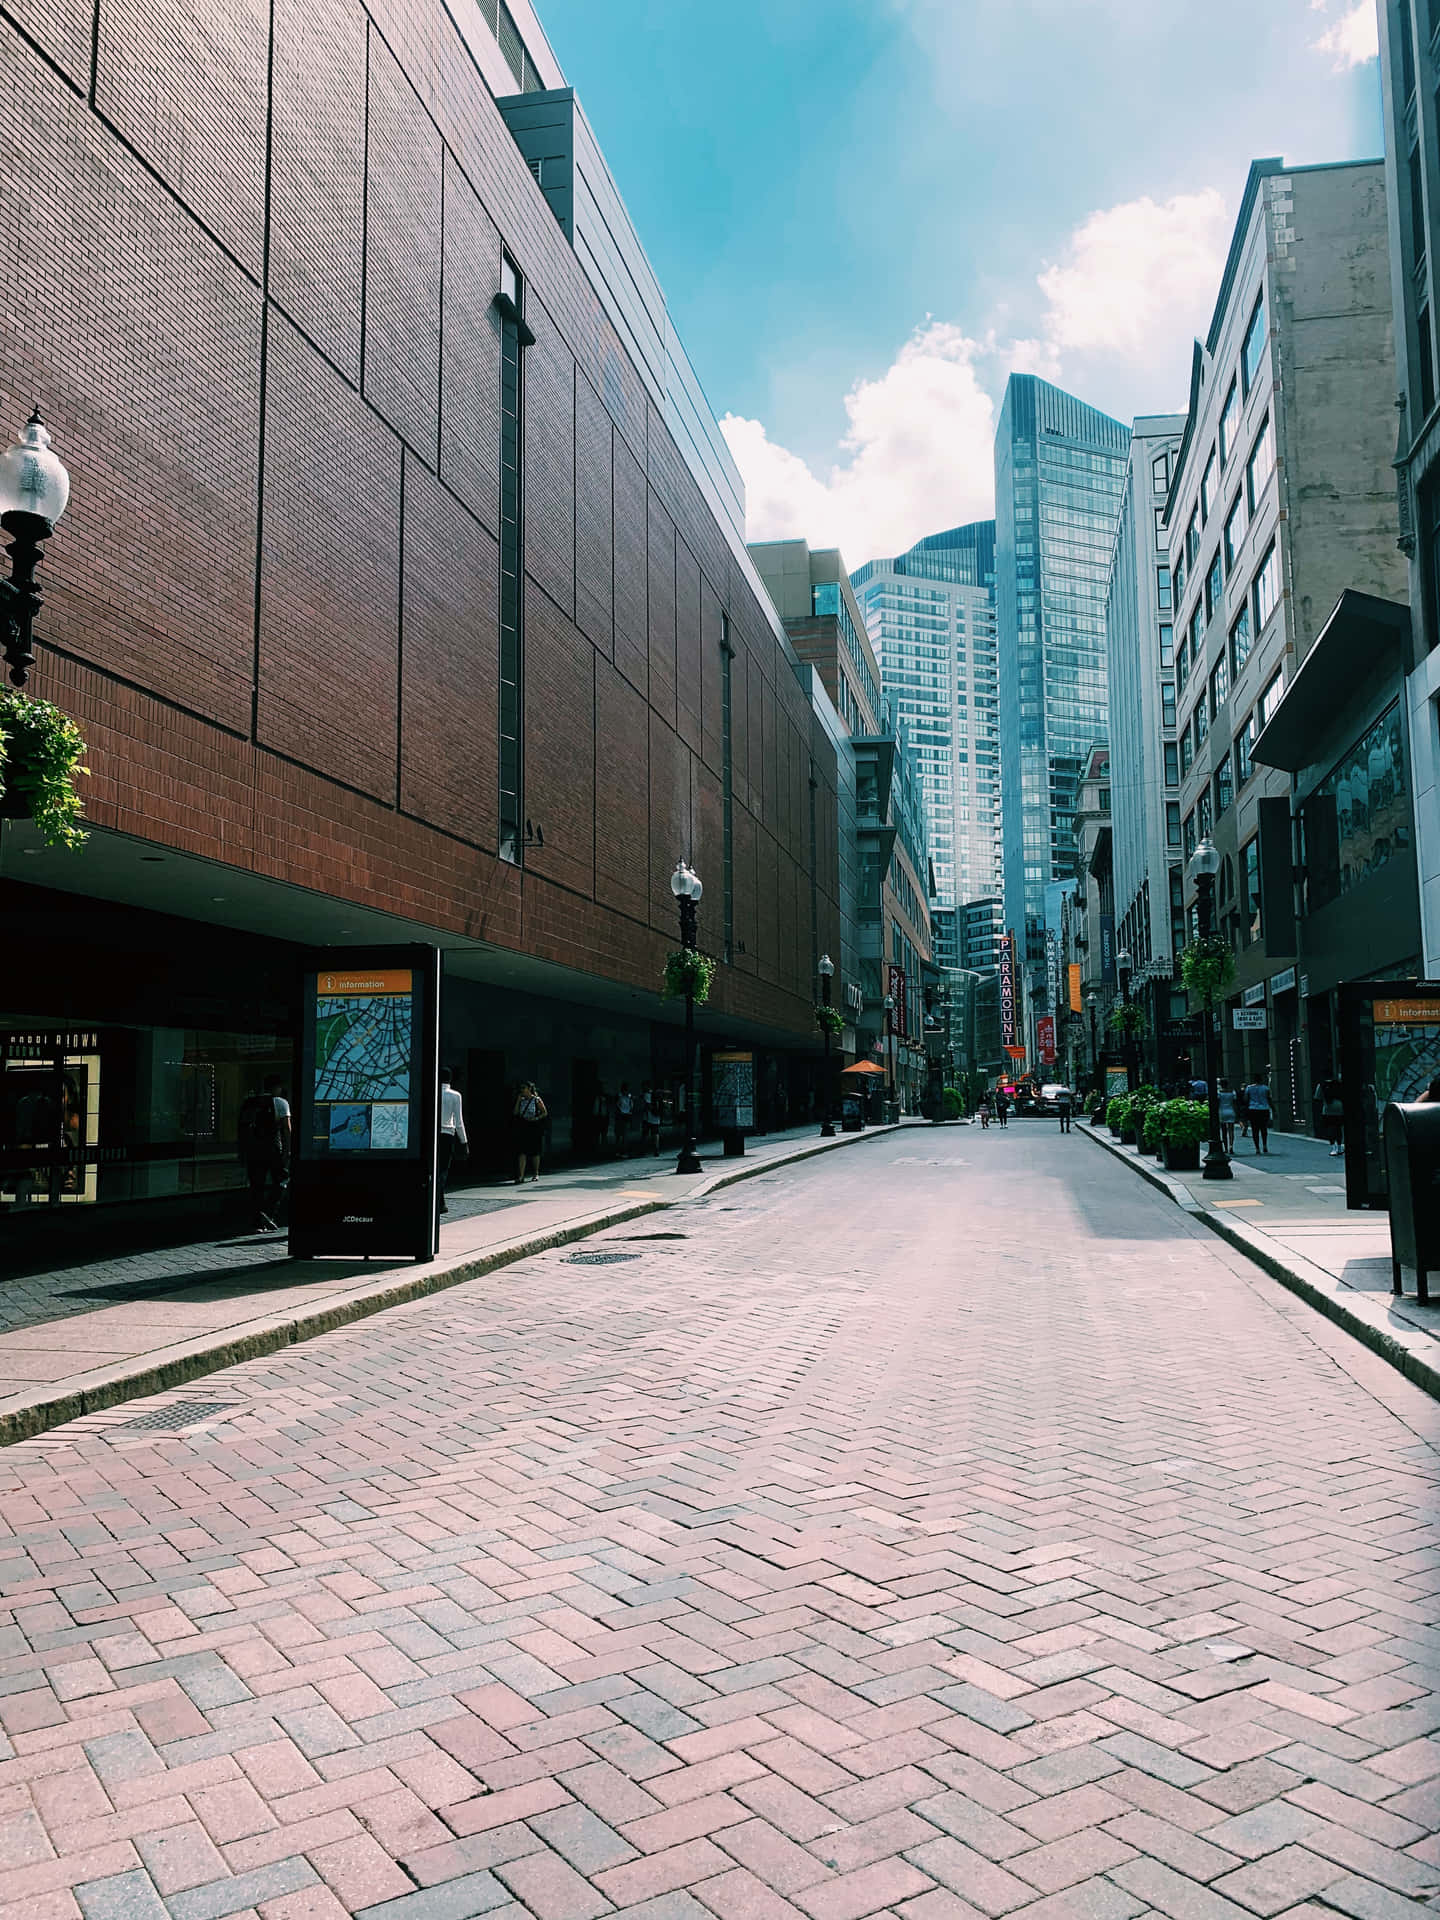 Glistening pavement of a city sidewalk